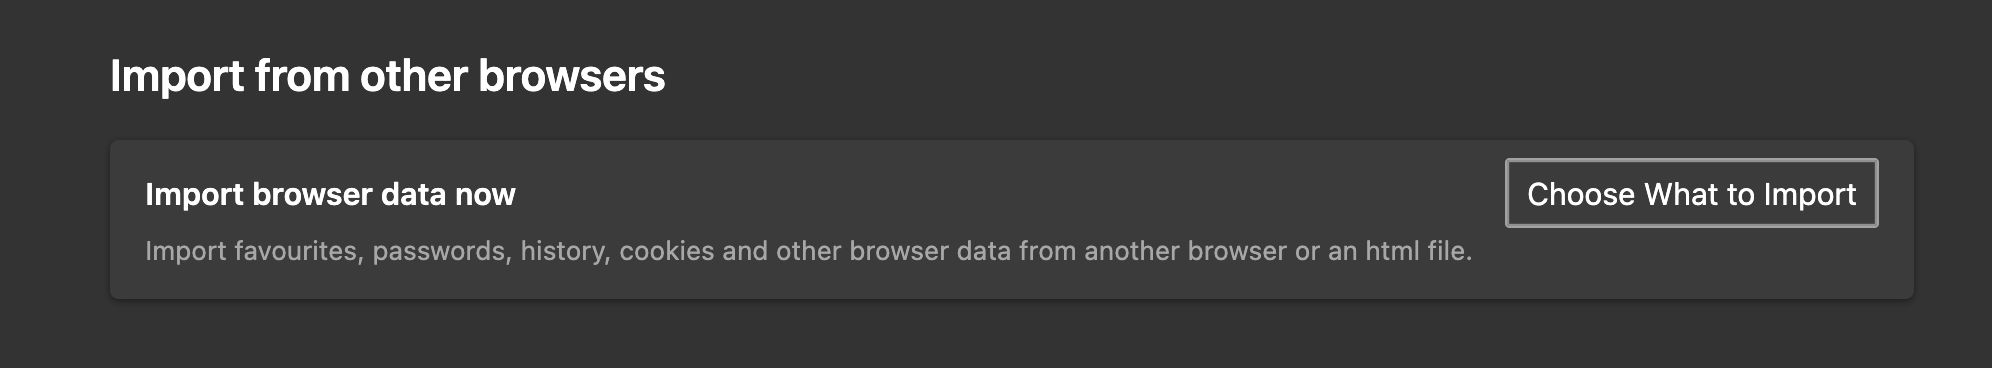 Screenshot of the Microsoft Edge import browser data option 